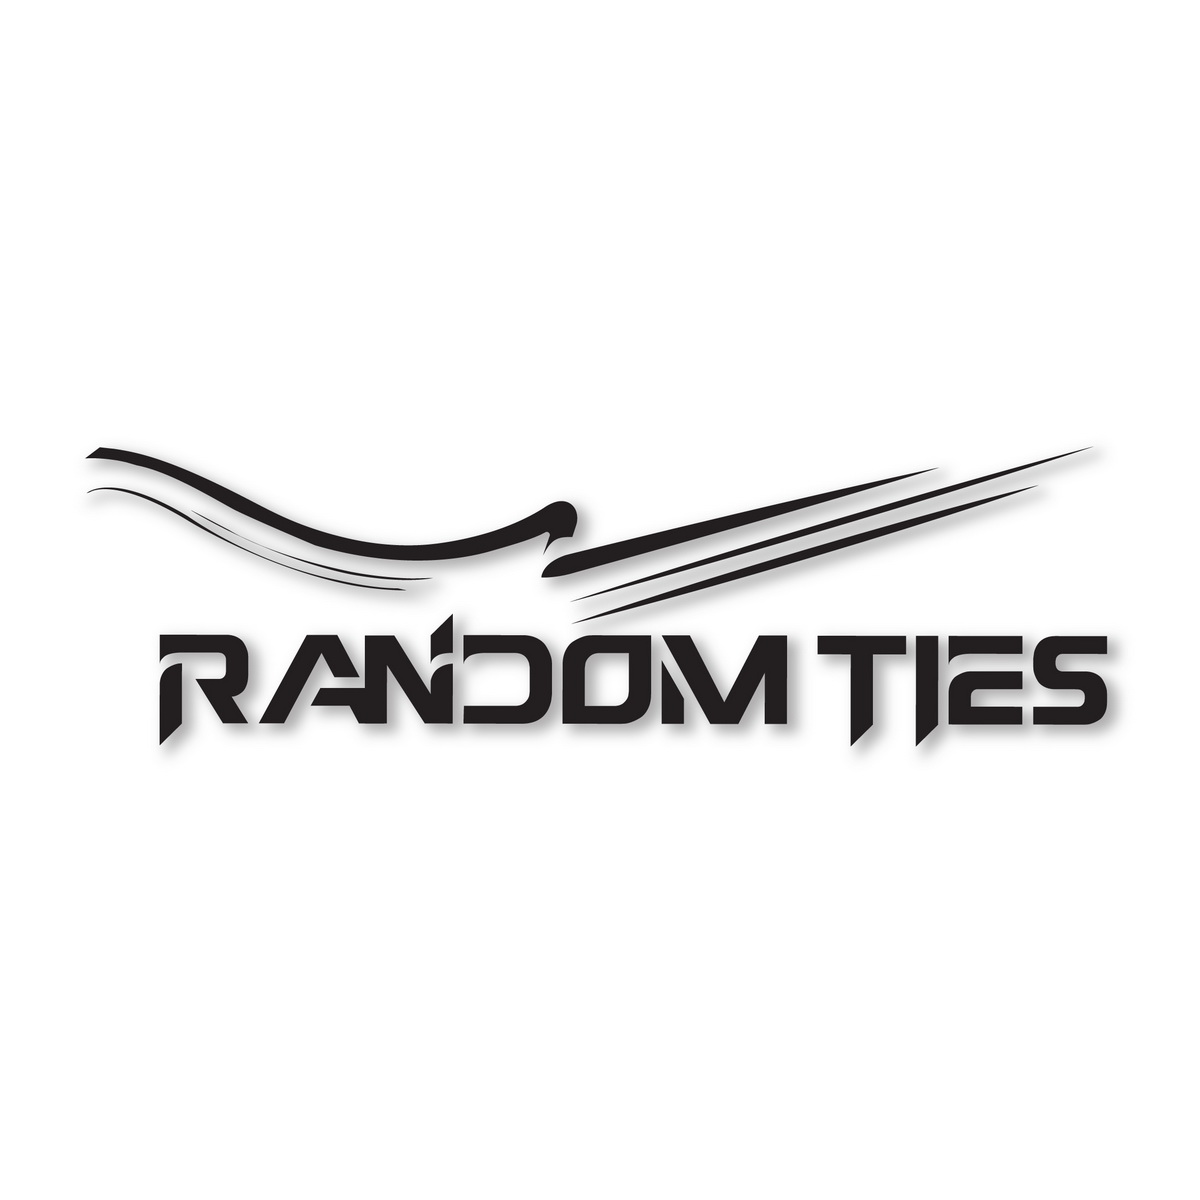 randometies logo